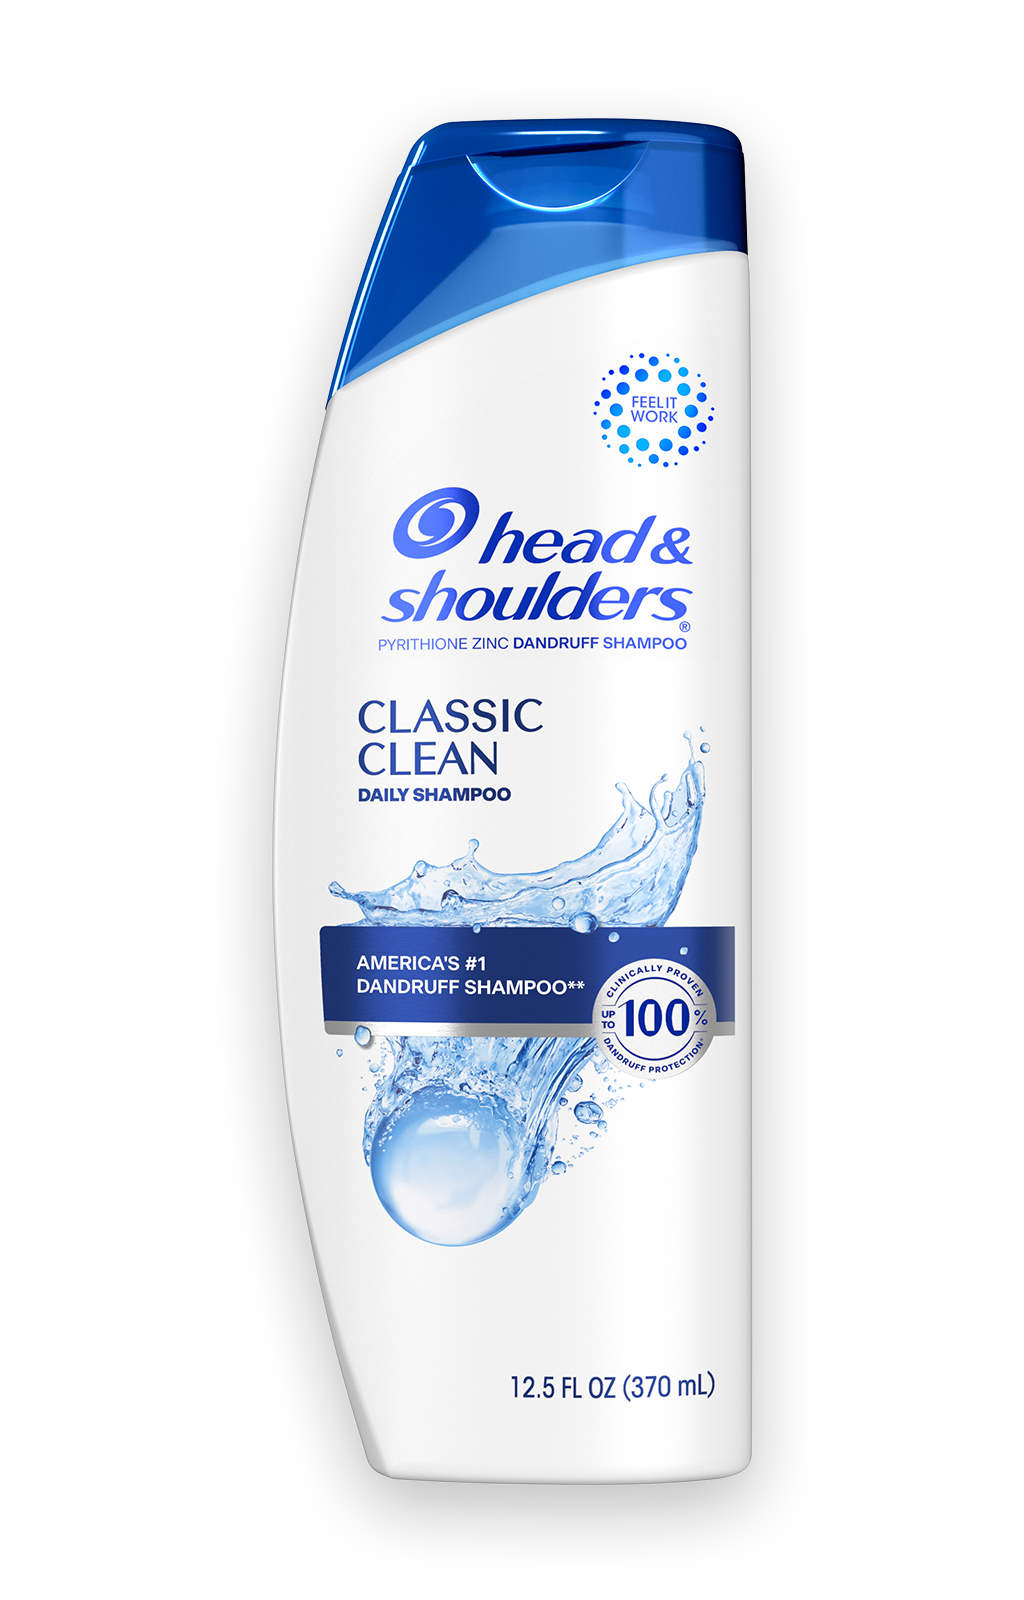 szampon head&shoulders clasic clean 2in1 366 ml